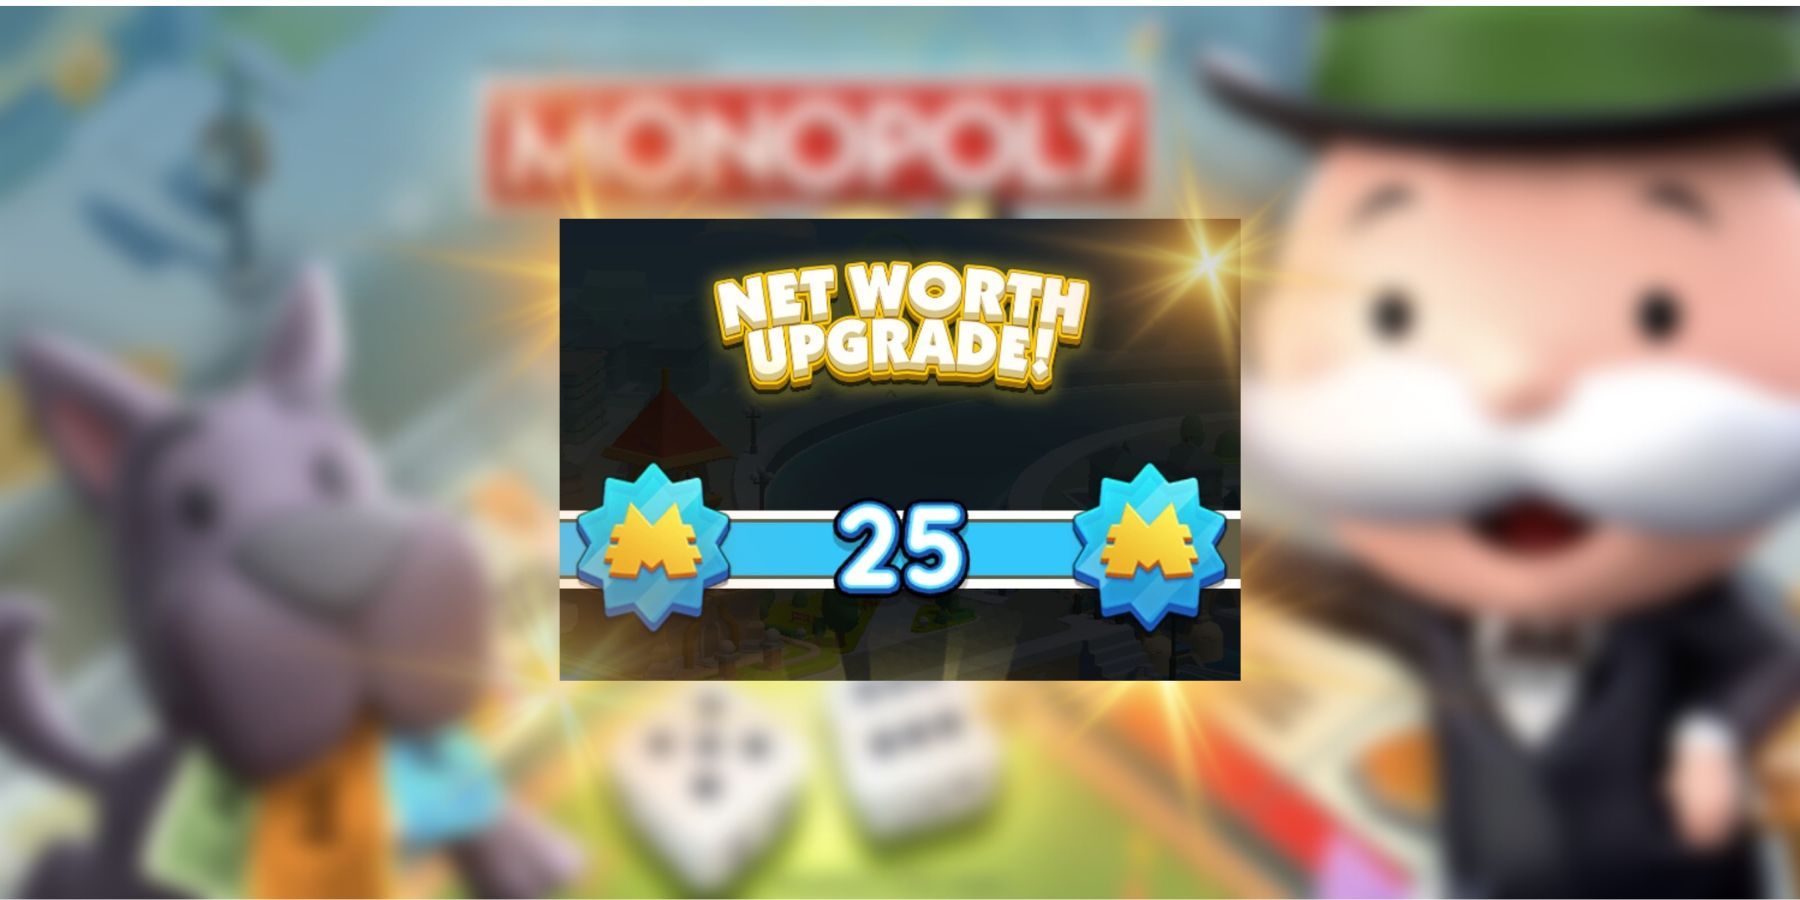 monopoly go net worth upgrade screen.